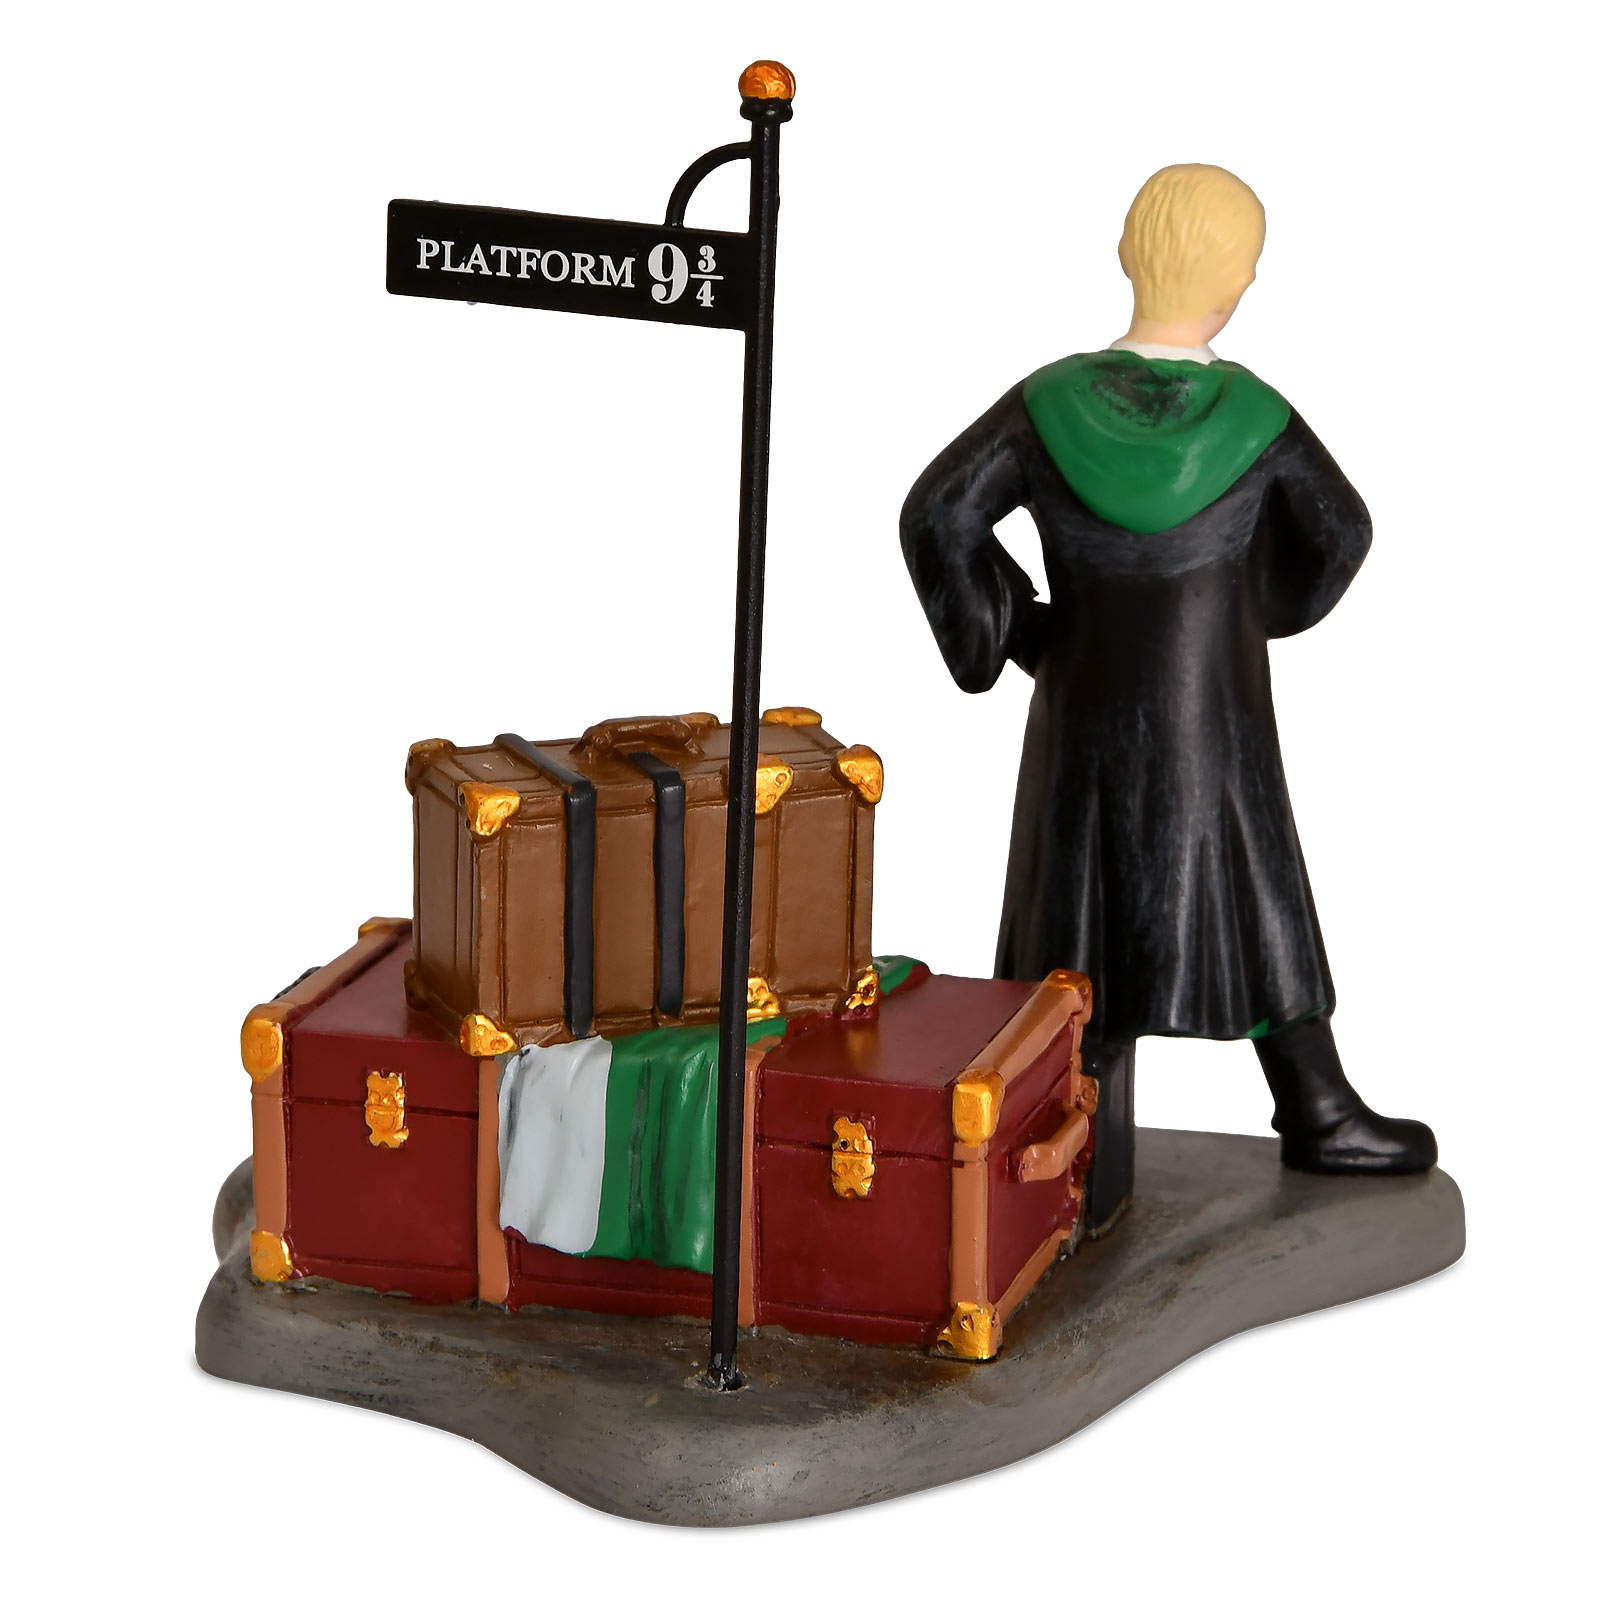 Harry Potter - Draco Malfoy on track 9 3/4 figure